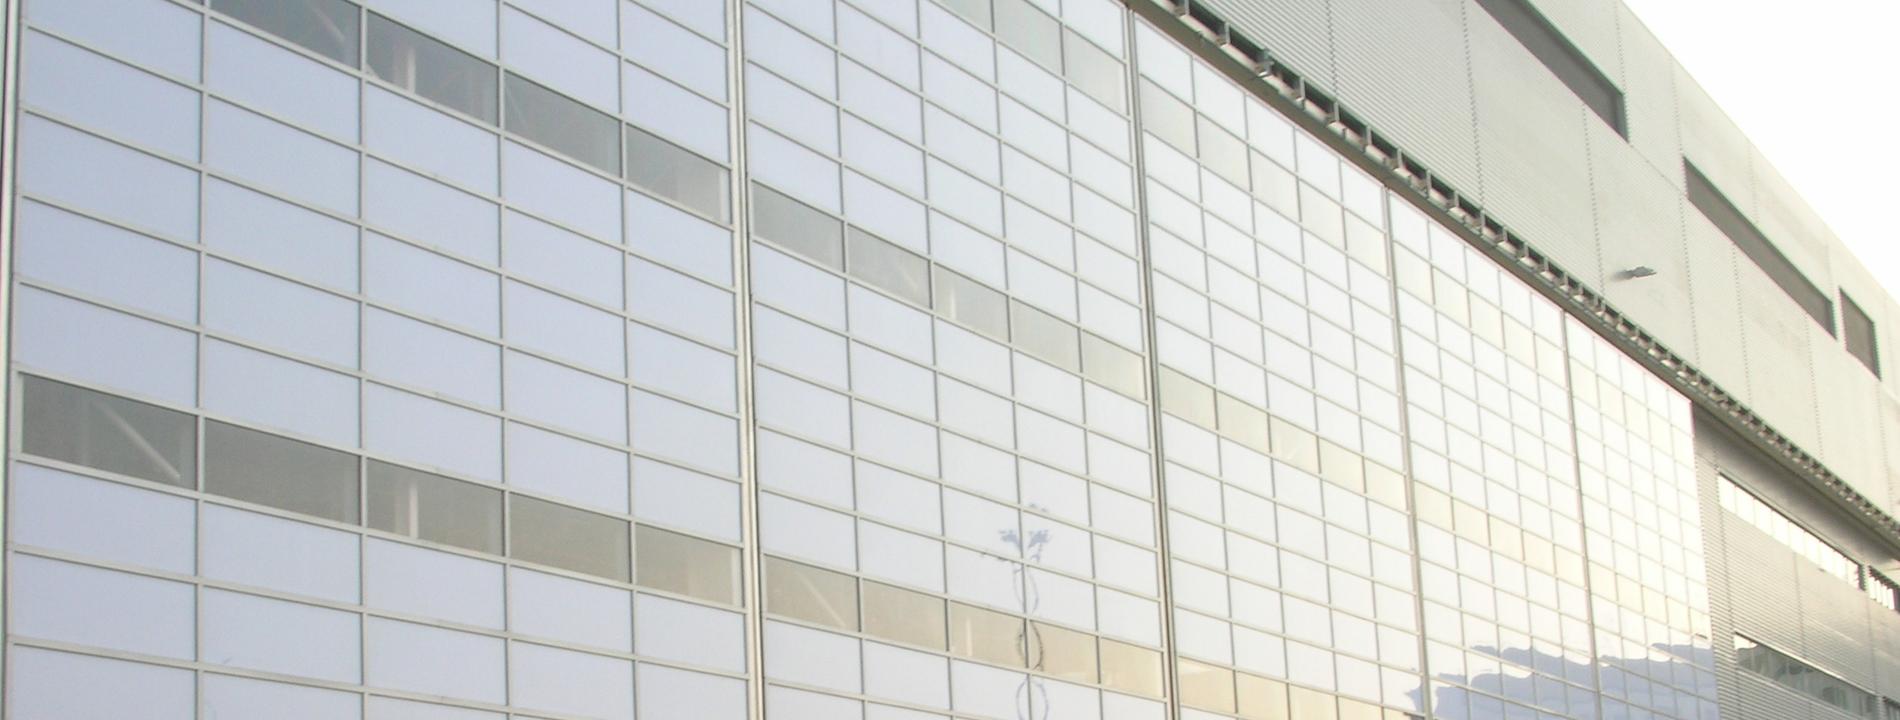 Patterned Solid Plastic Polycarbonate Sheet Skylight Greenhouse Window Glazing 